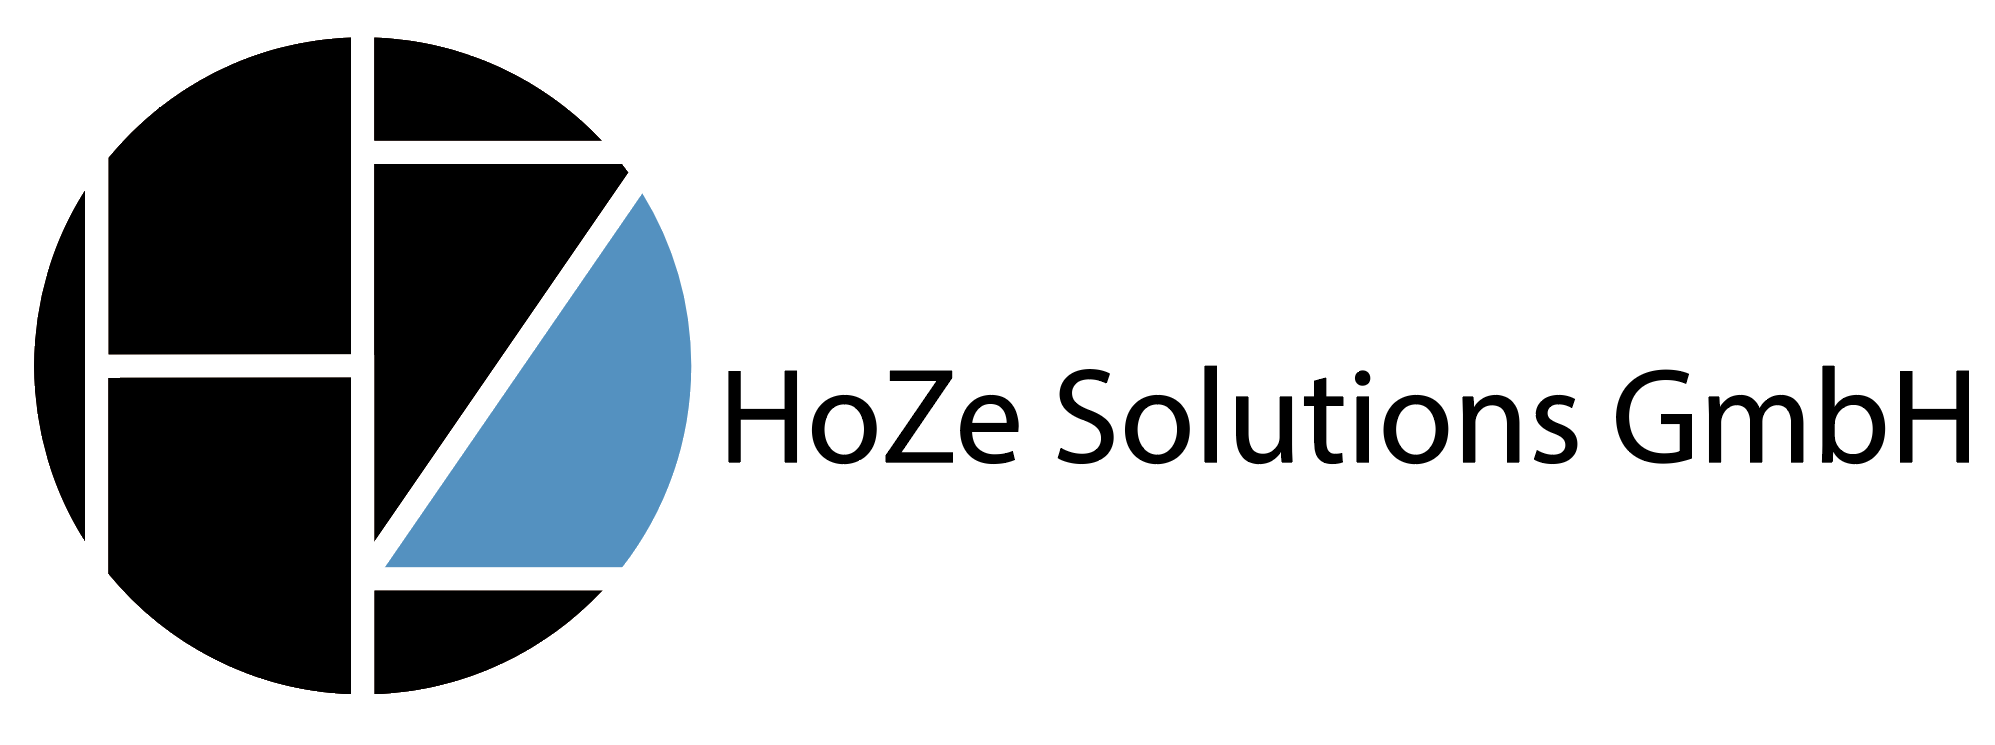 hoze-logo_0619